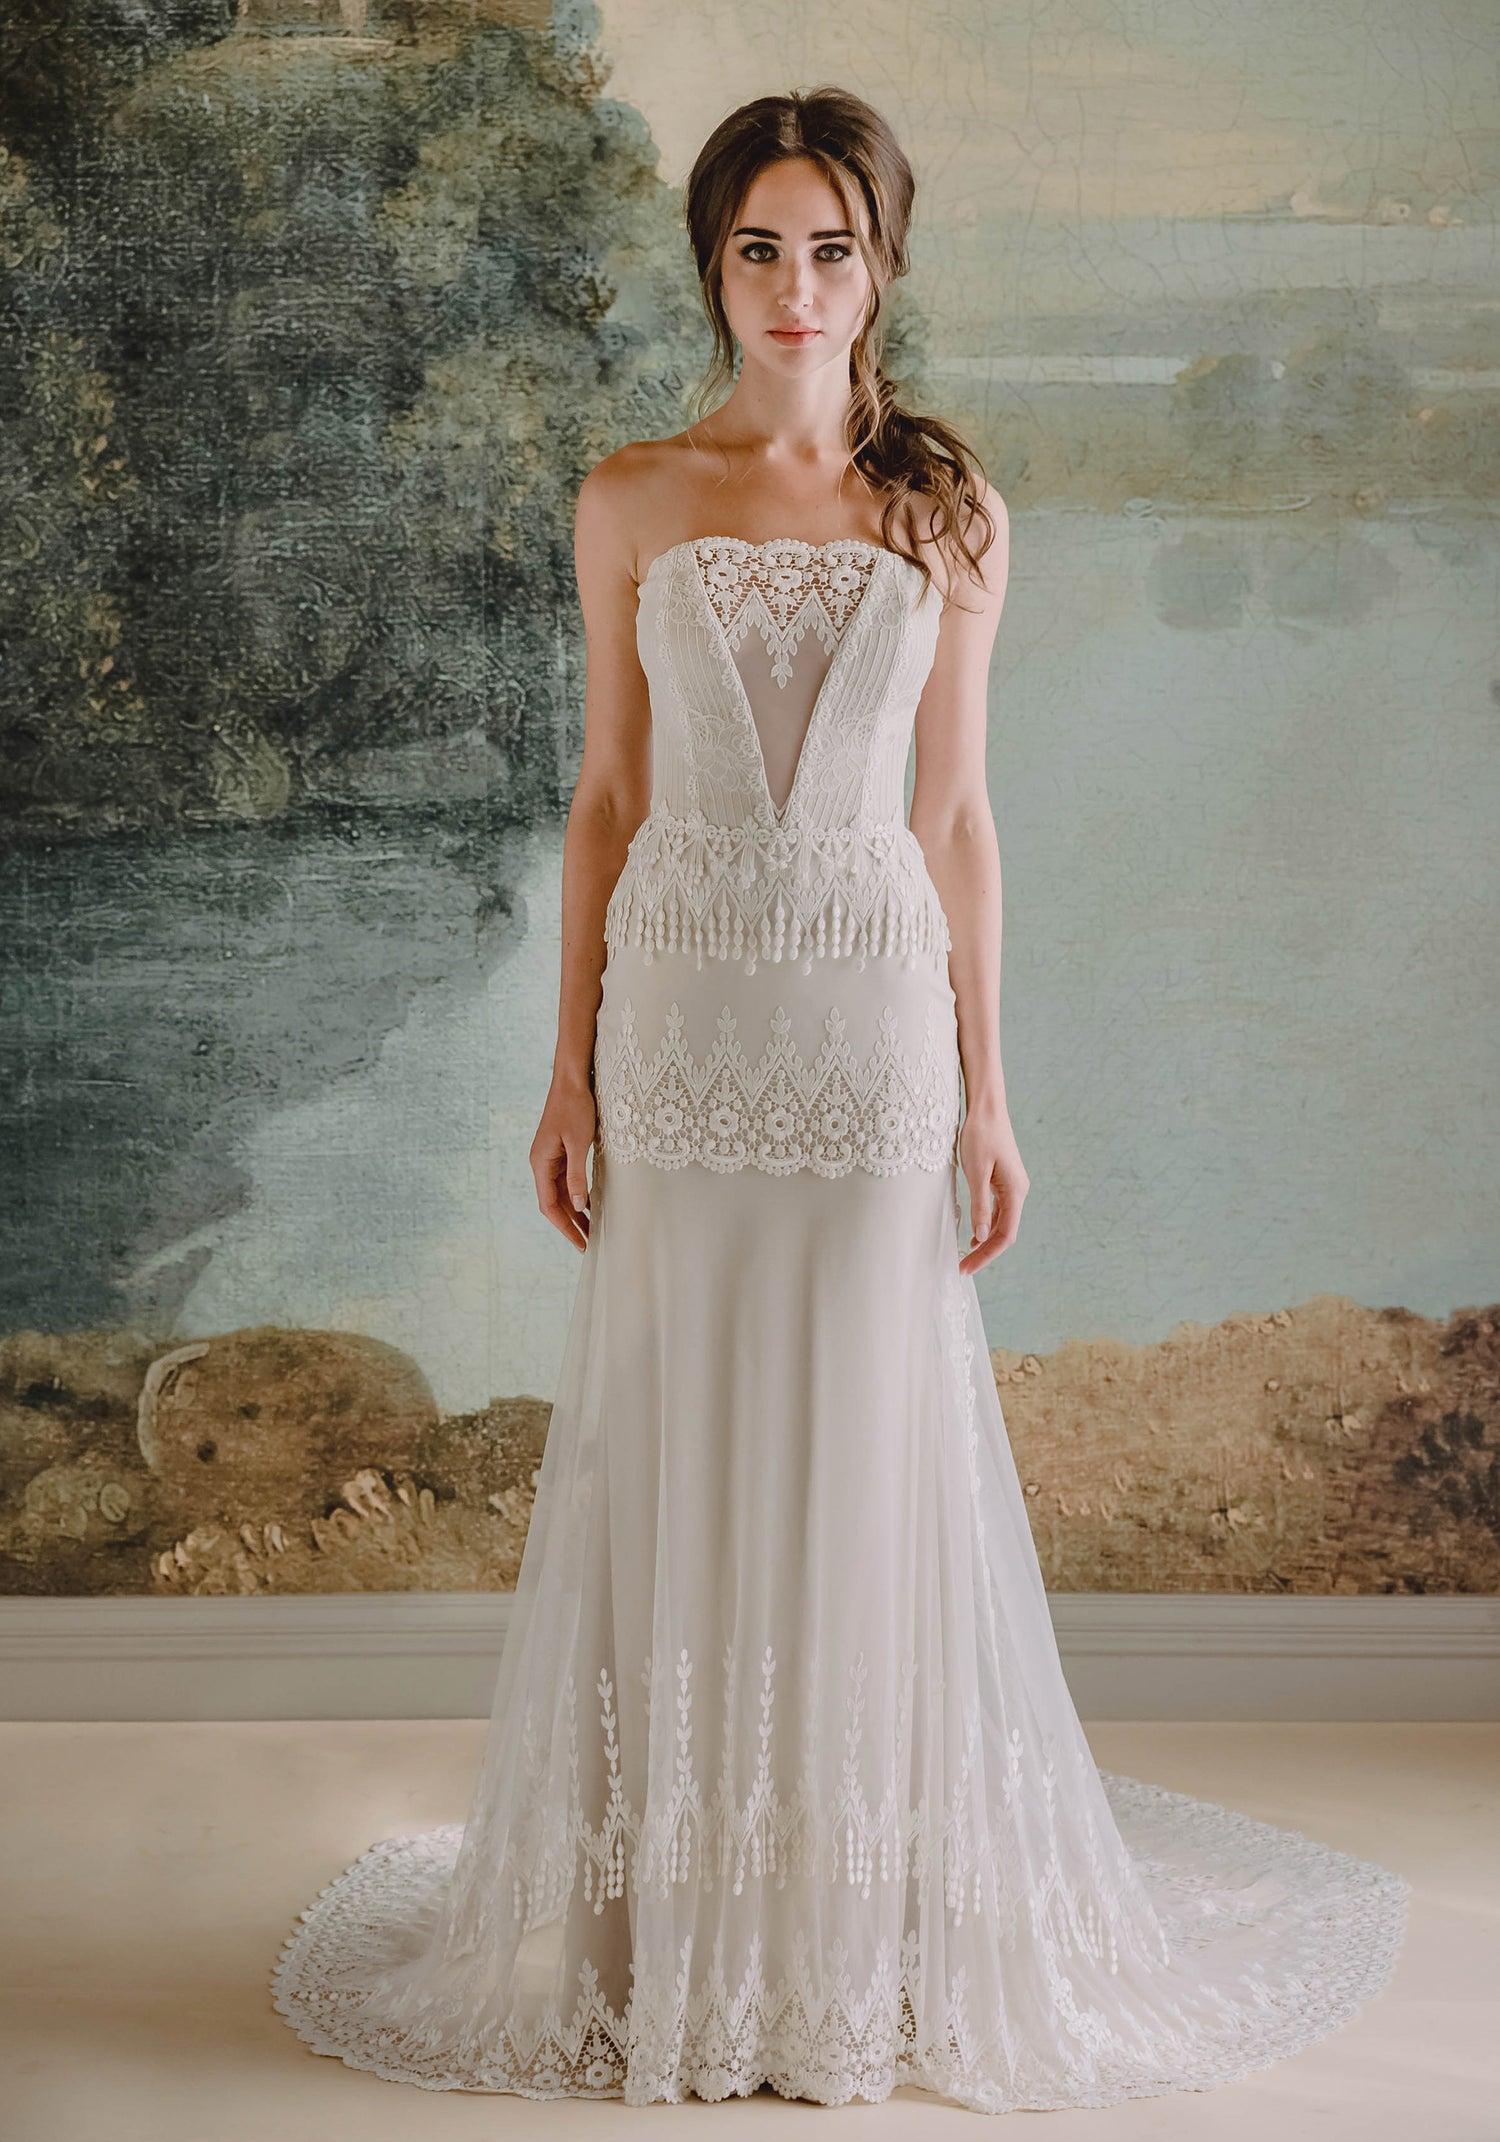 Lace Wedding Dress Images [Wedding Dress Inspiration]